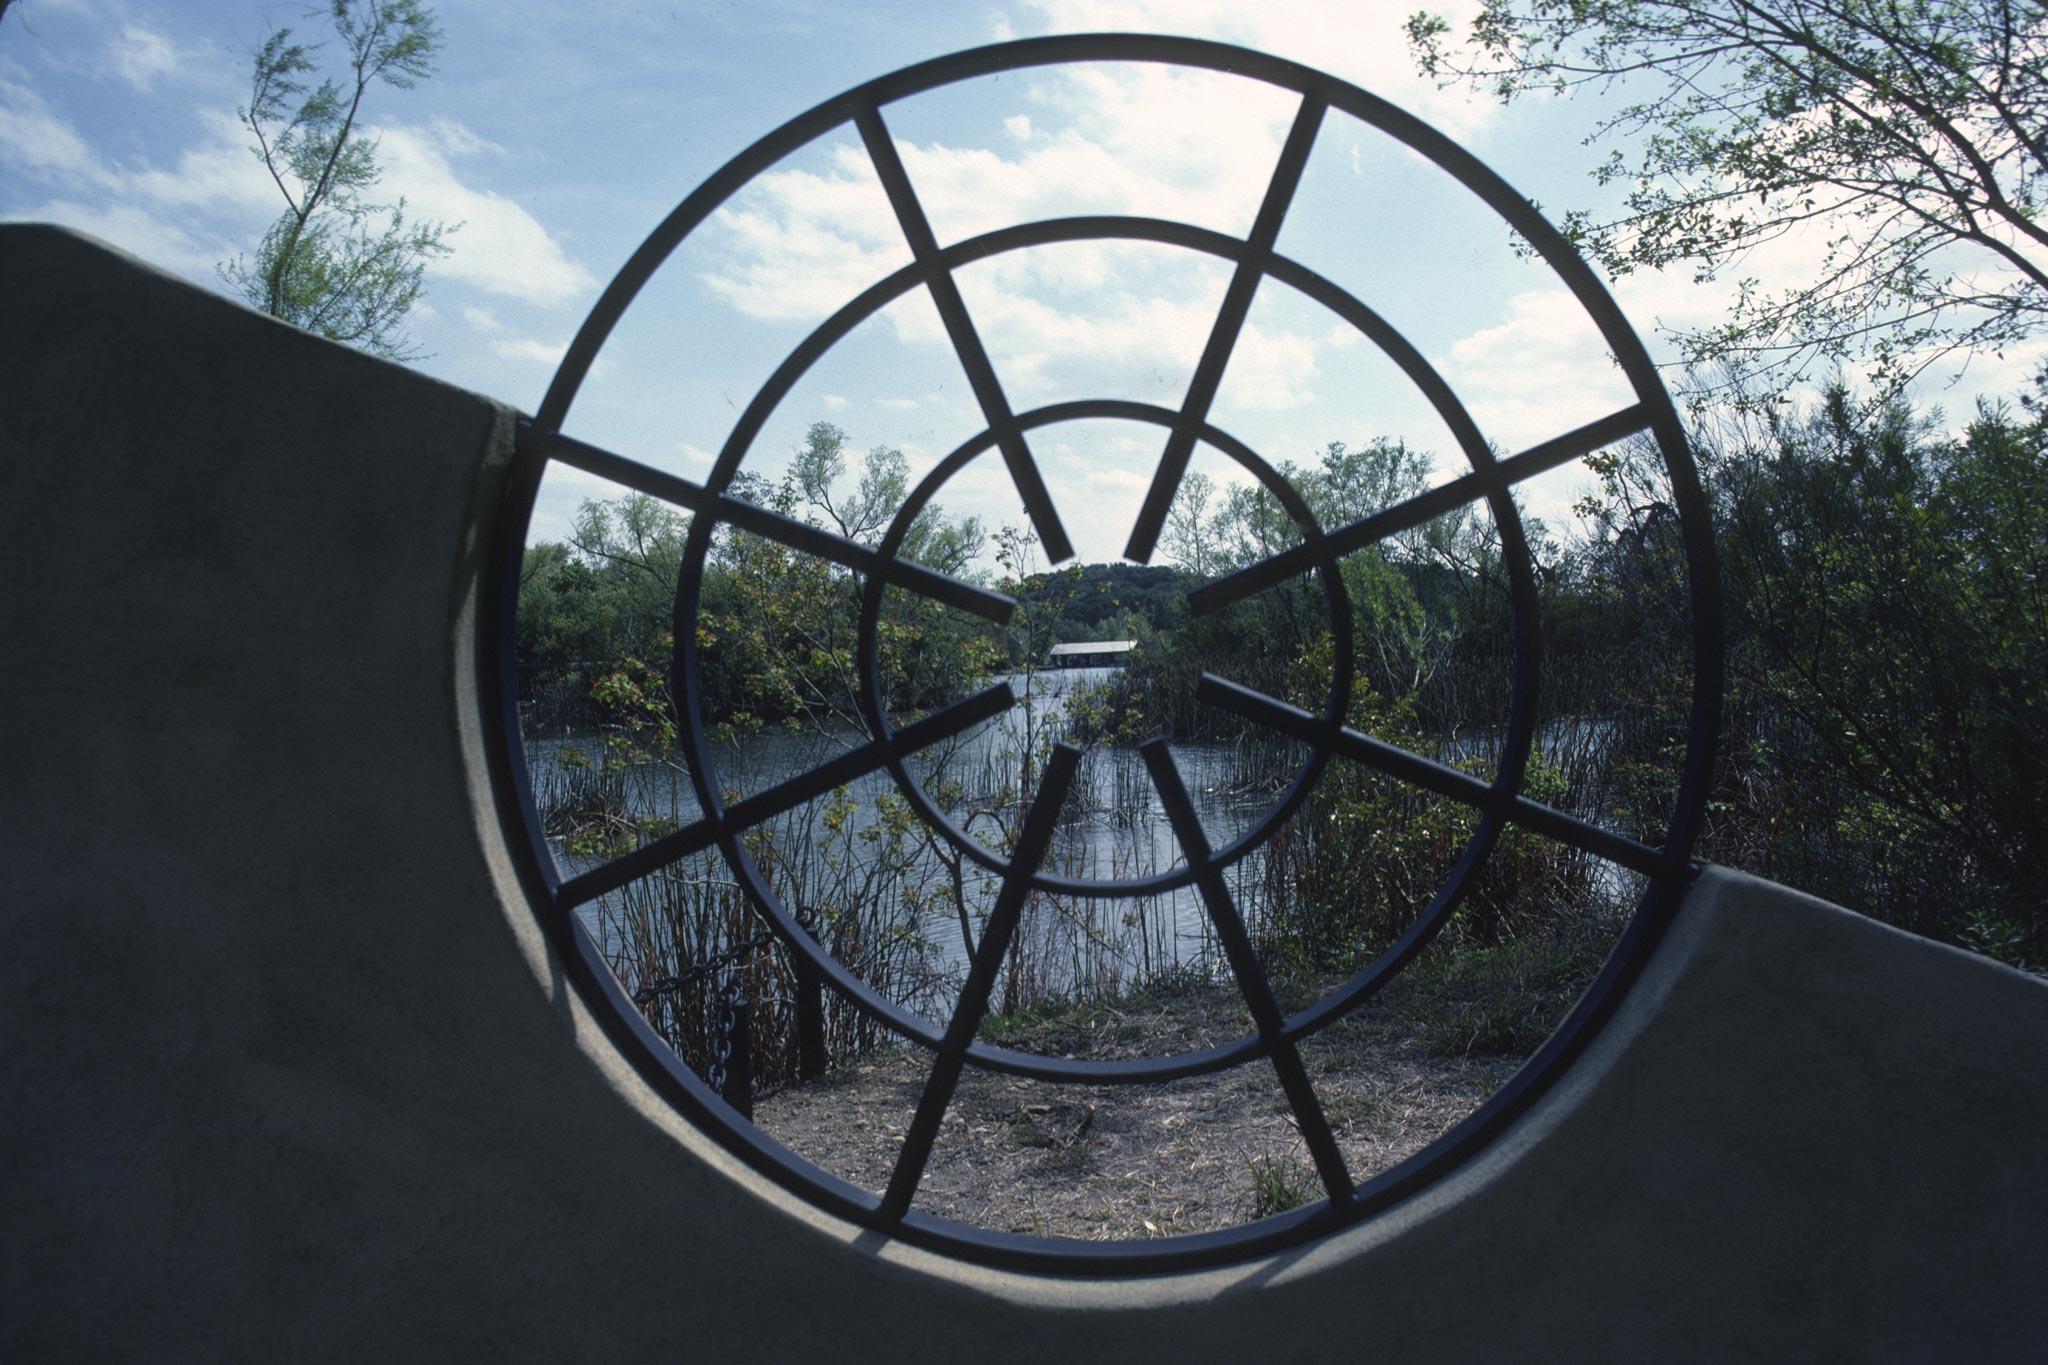 a circular metal grate frames a building across a body of water